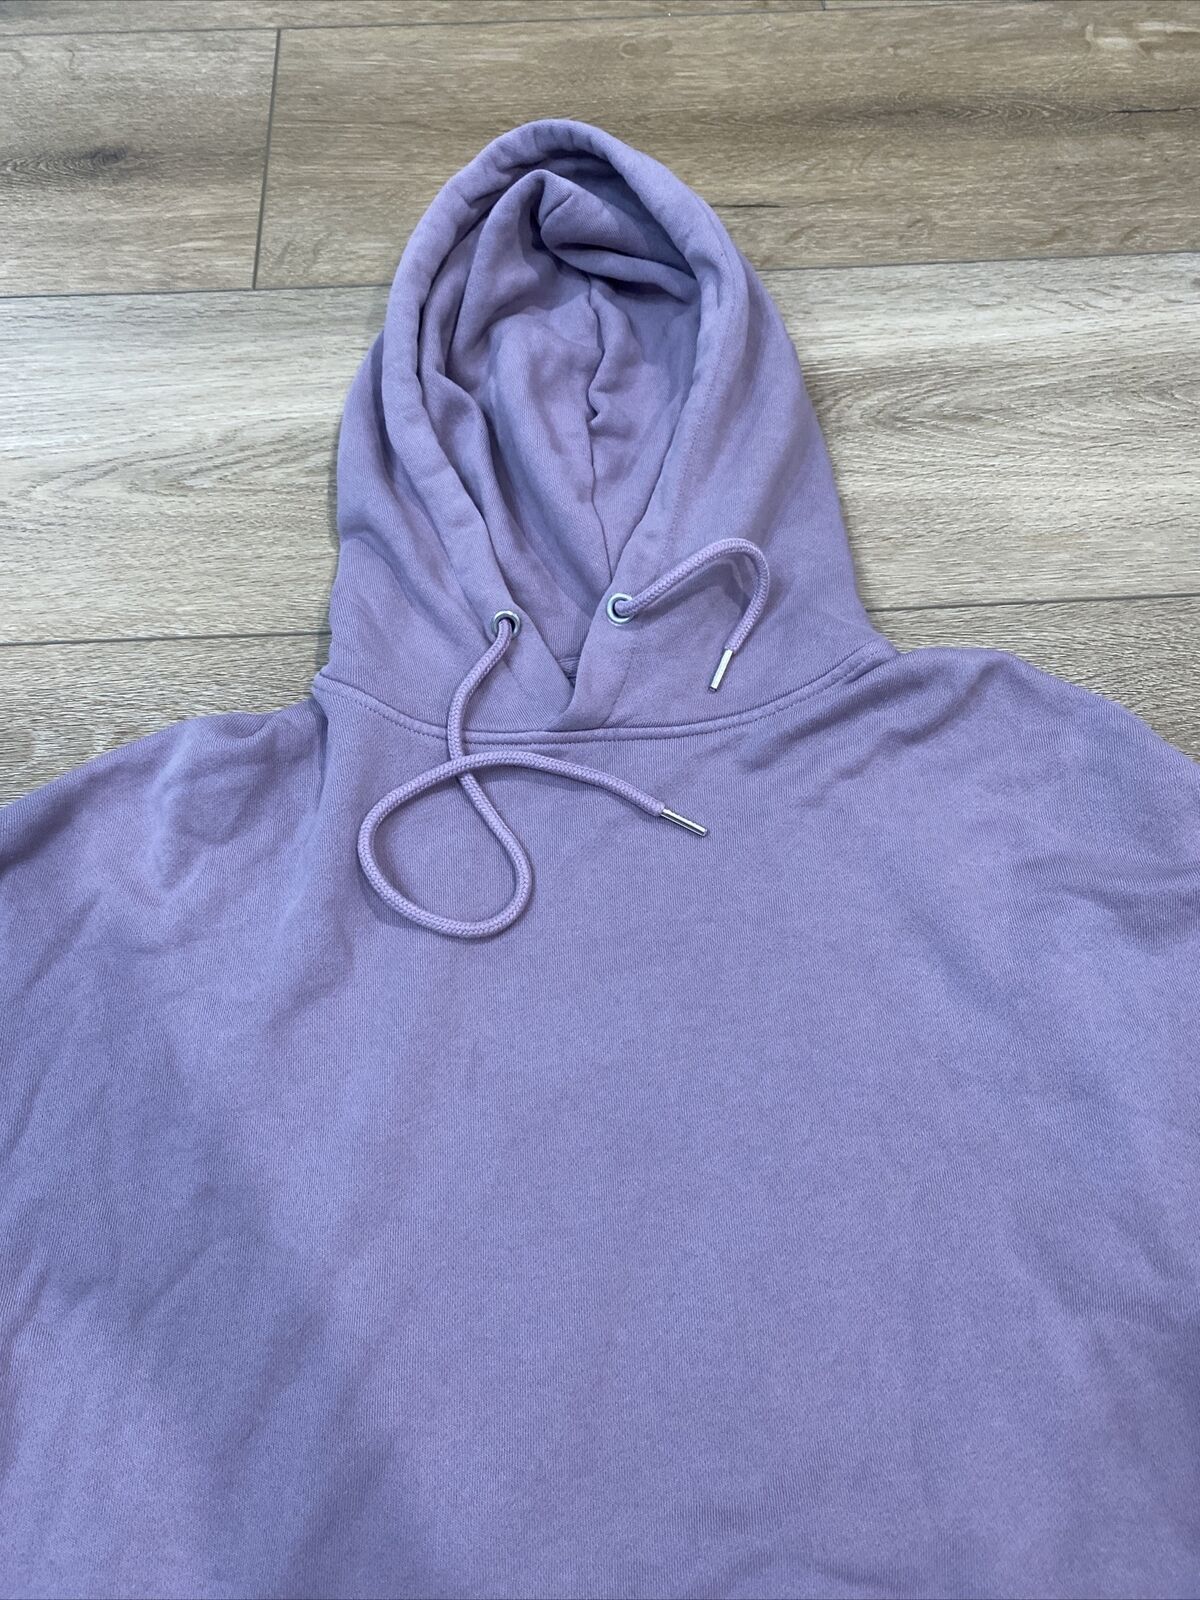 Kuwalla Tee Men's Purple Hoodie Sweater Size Small S Pullover | eBay